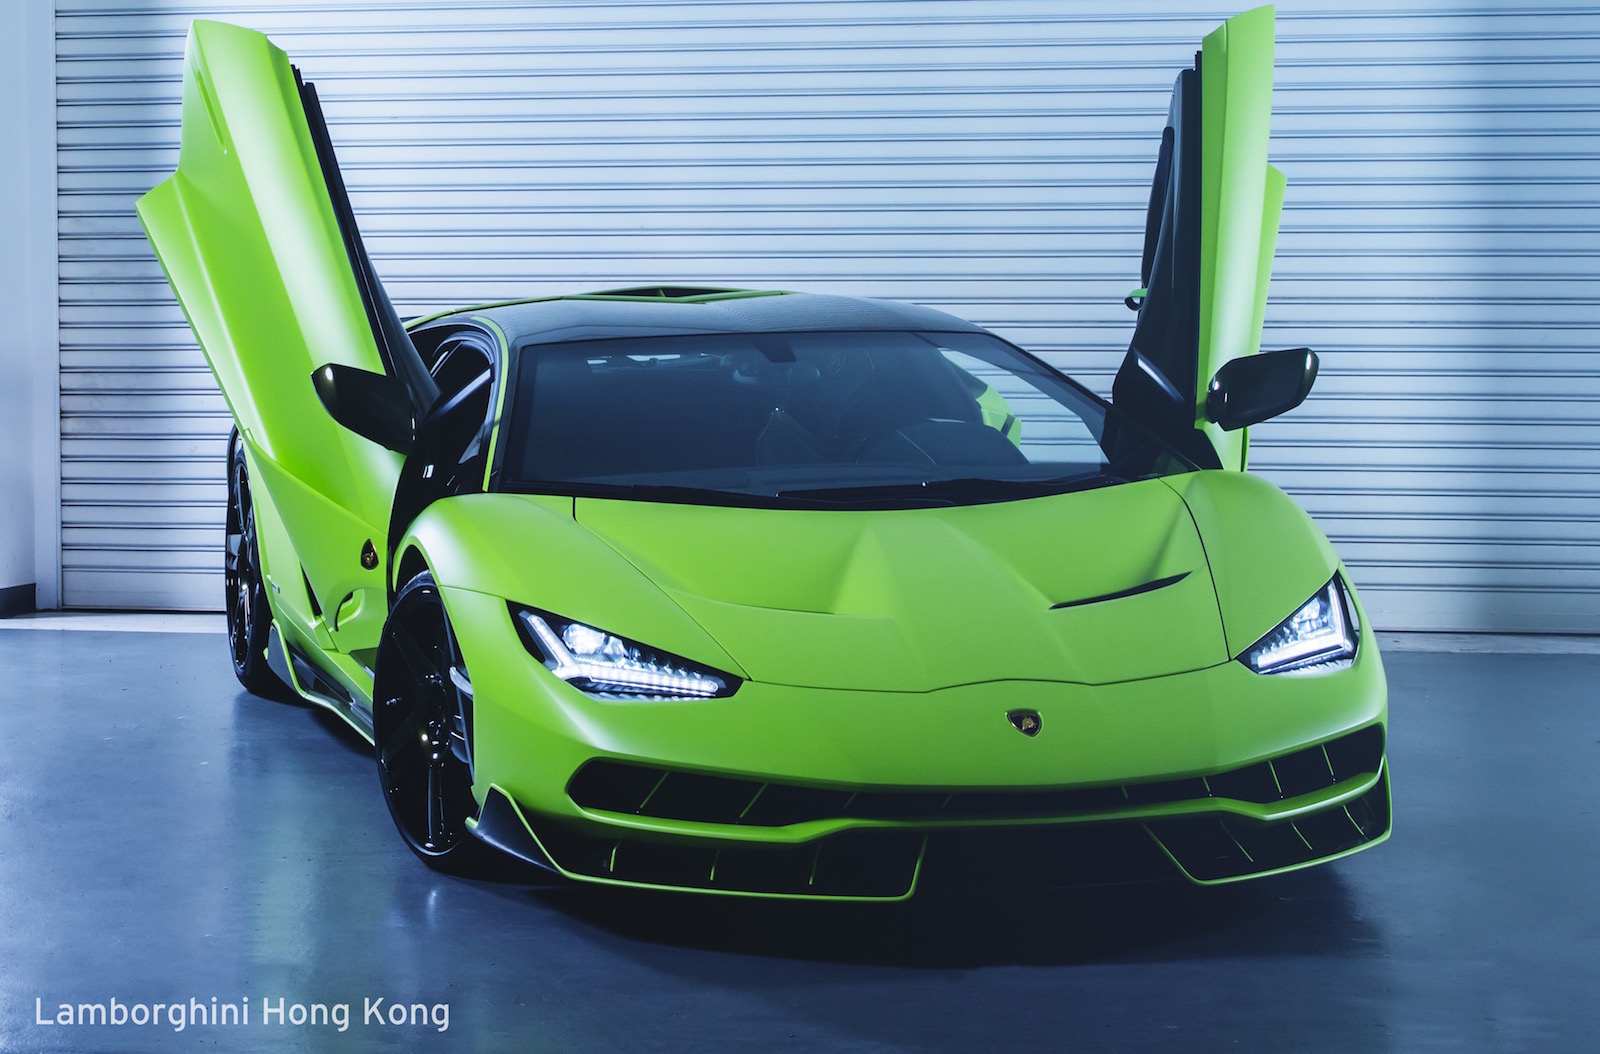 Lamborghini Centenario lands in Hong Kong, only green model made